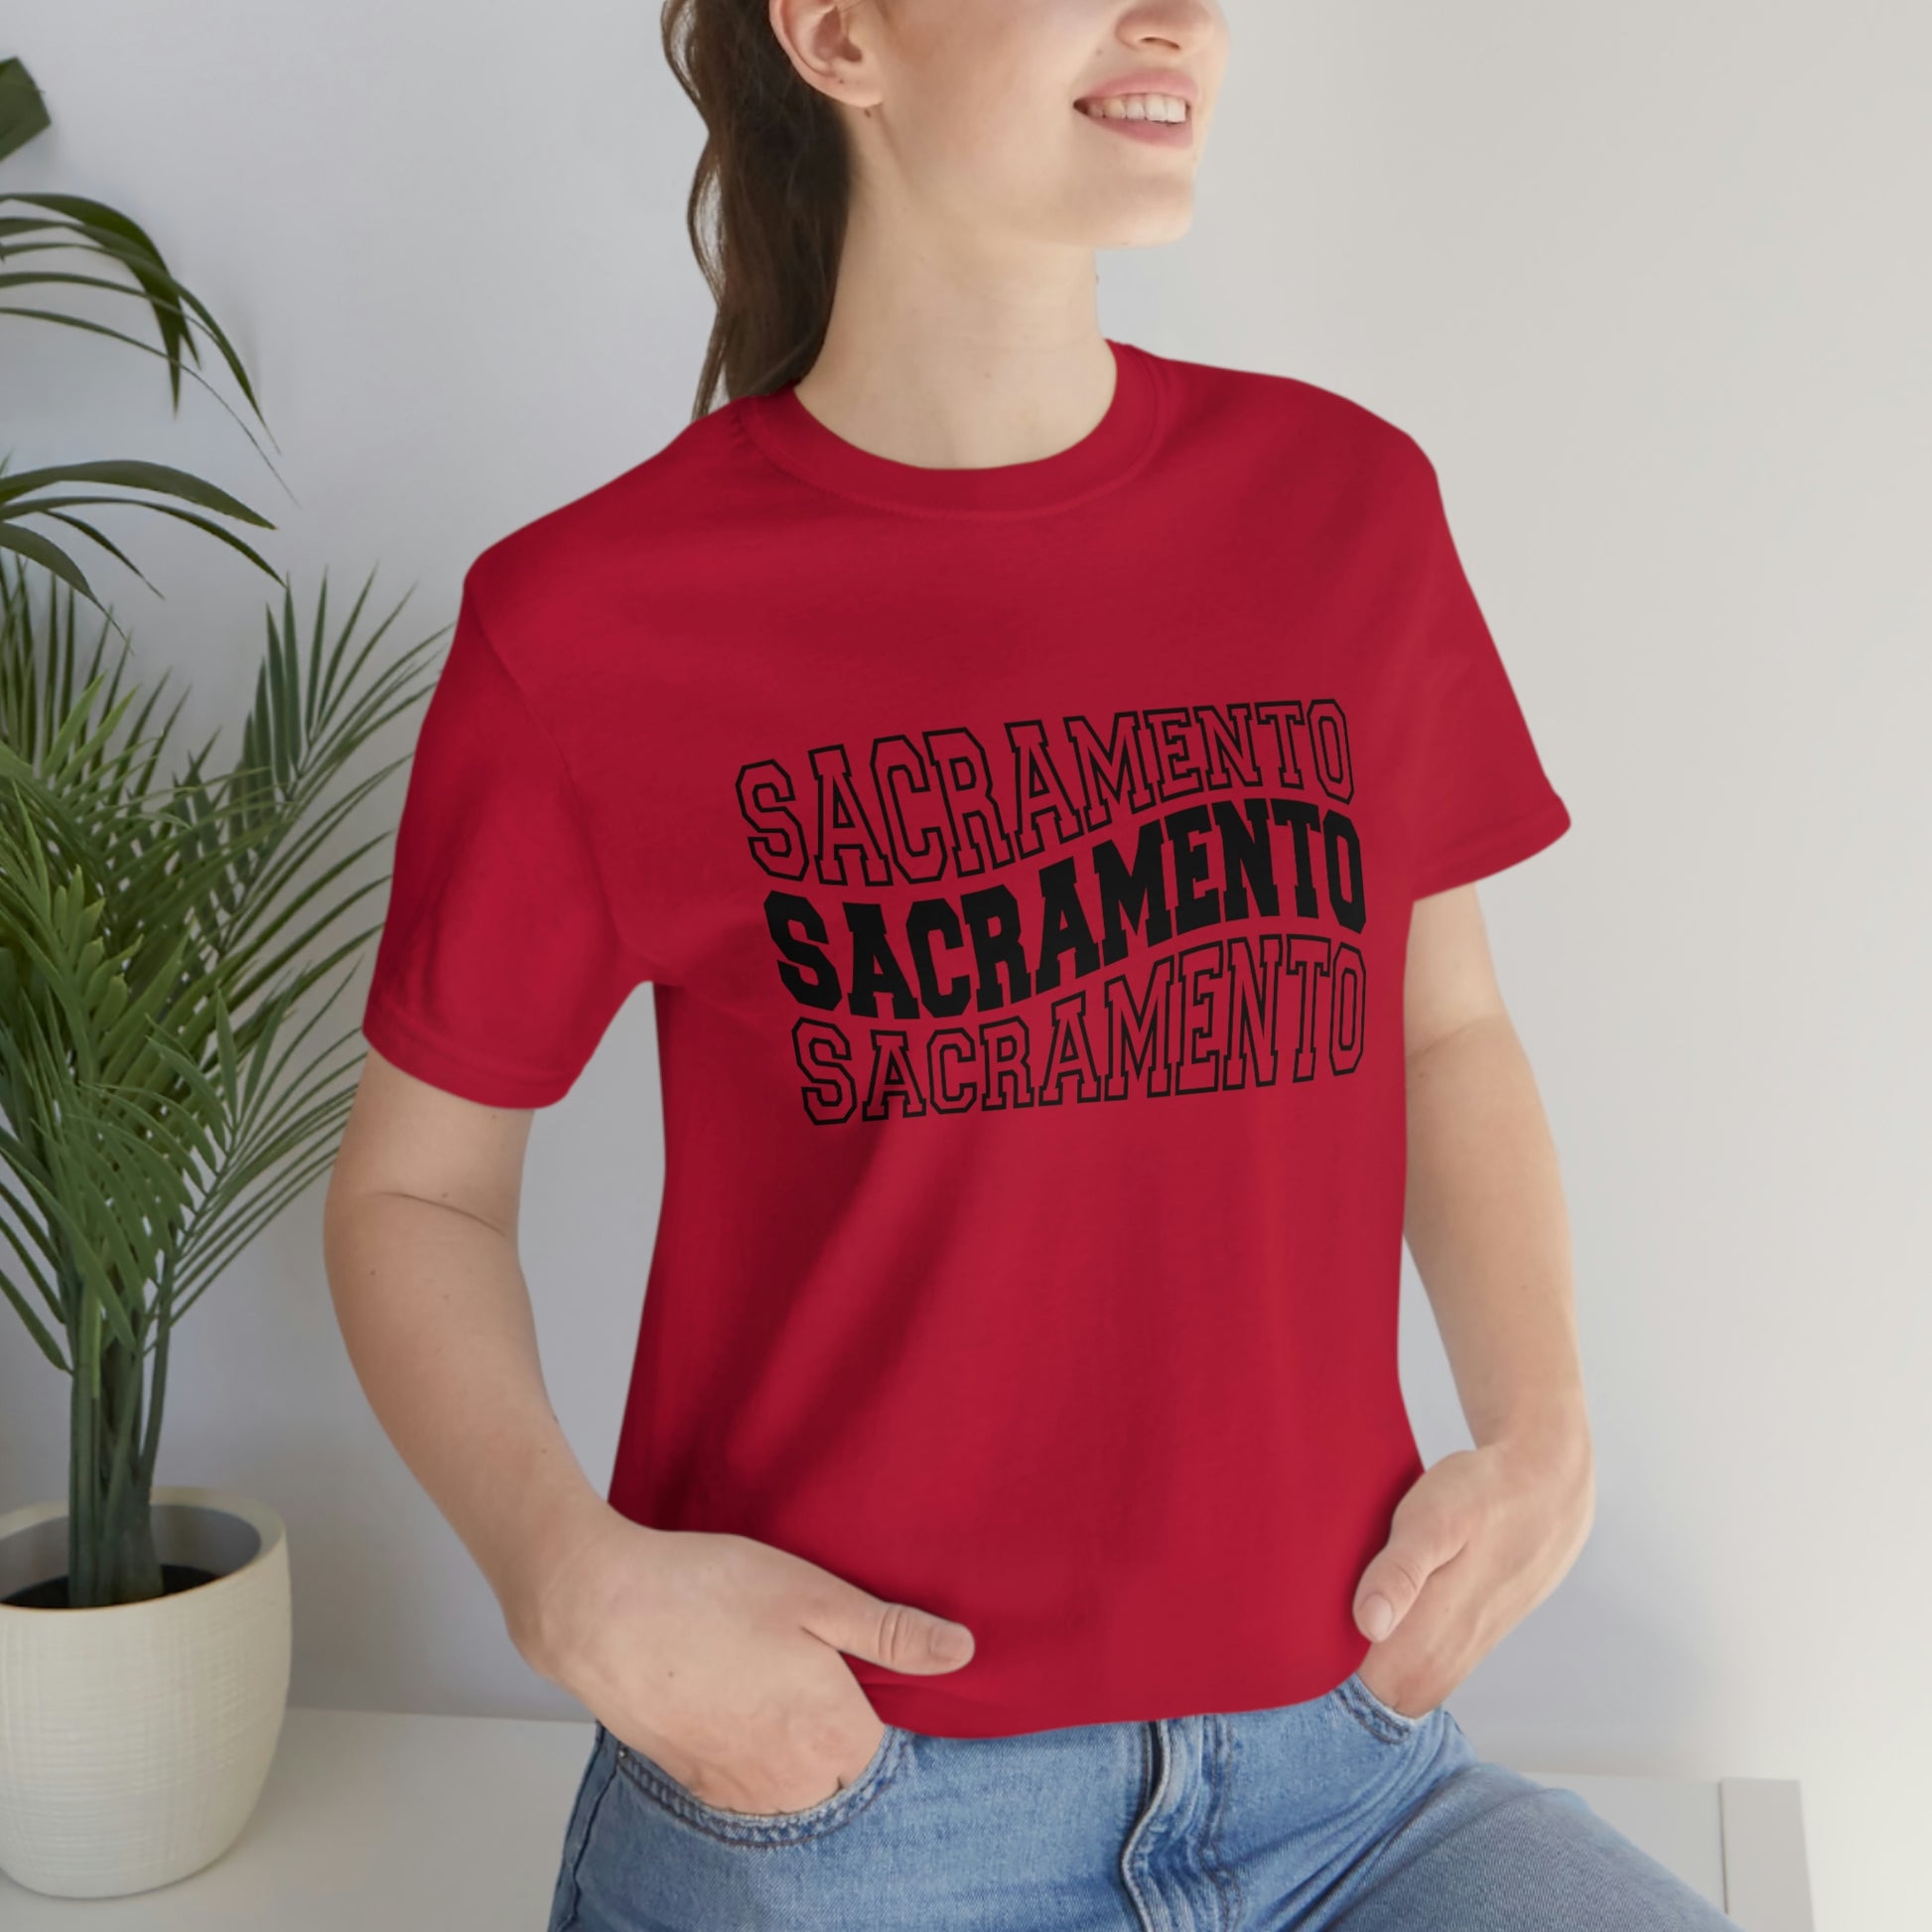 Sacremento California Varsity Letters Wavy Unisex Jersey Short Sleeve Tee Tshirt T-shirt